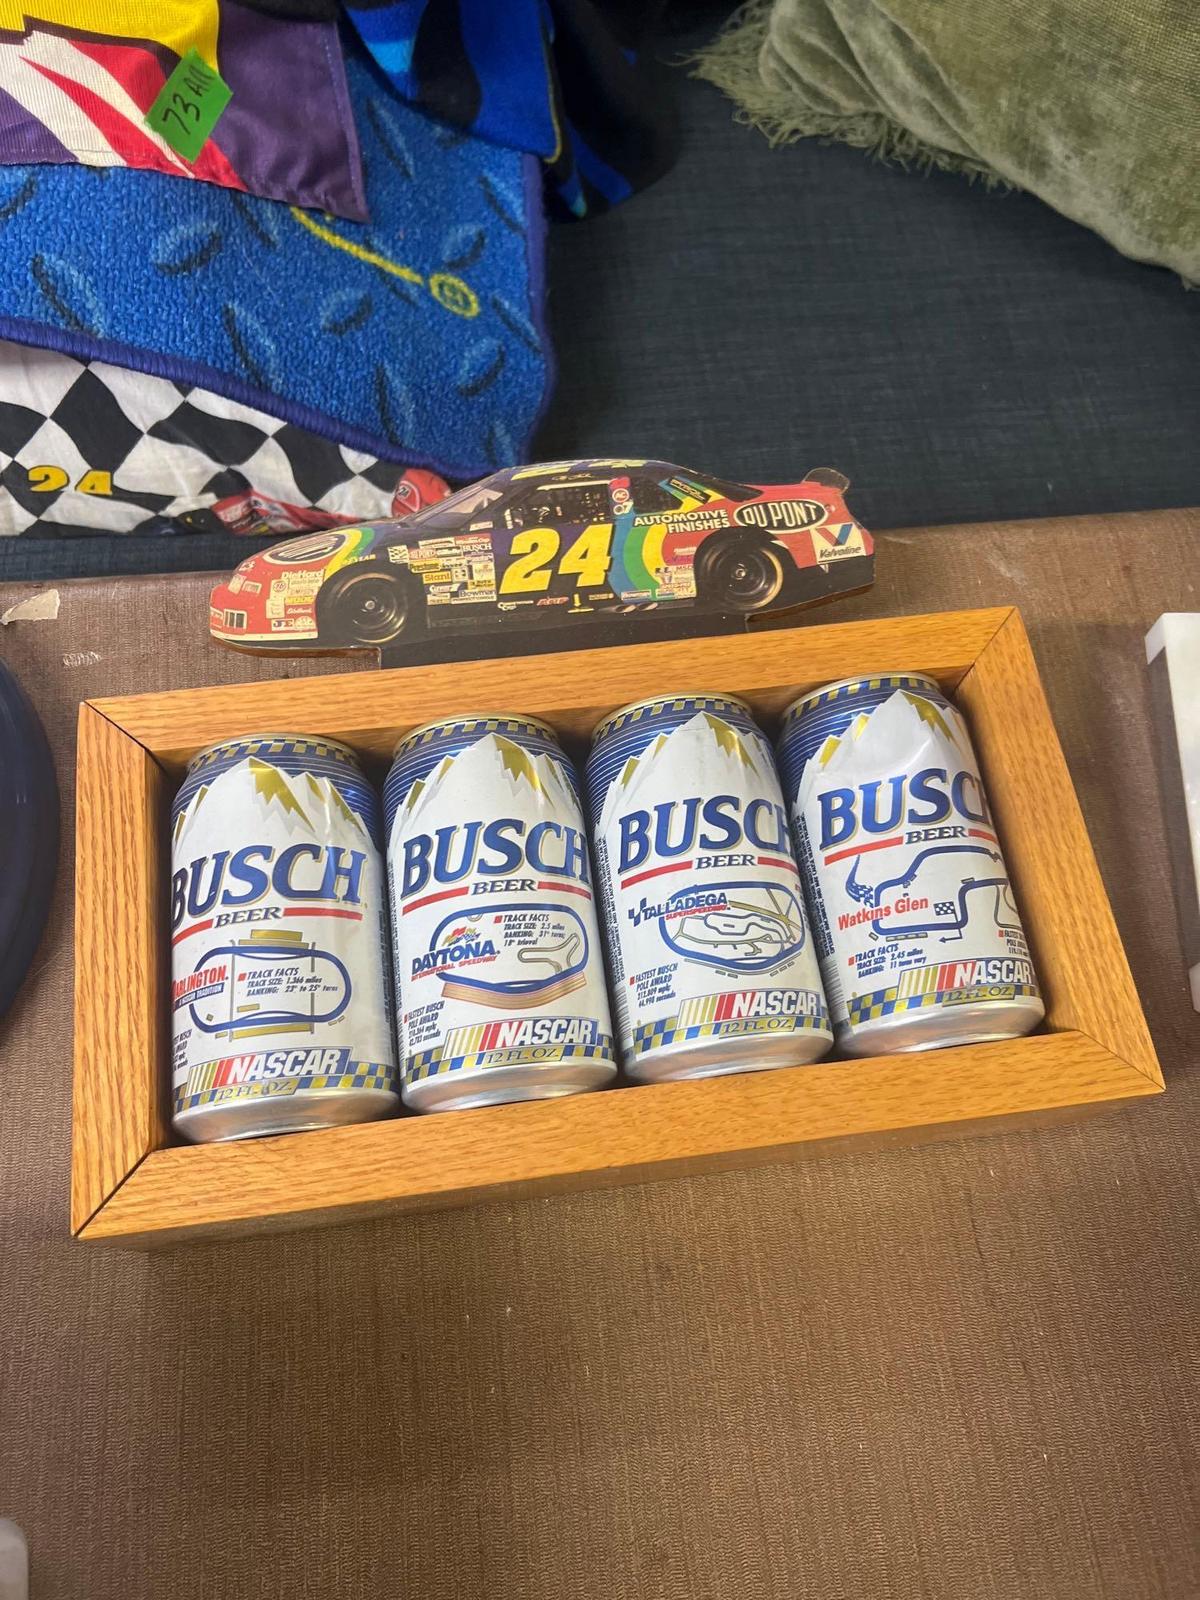 NASCAR bush beer cans and wooden holder